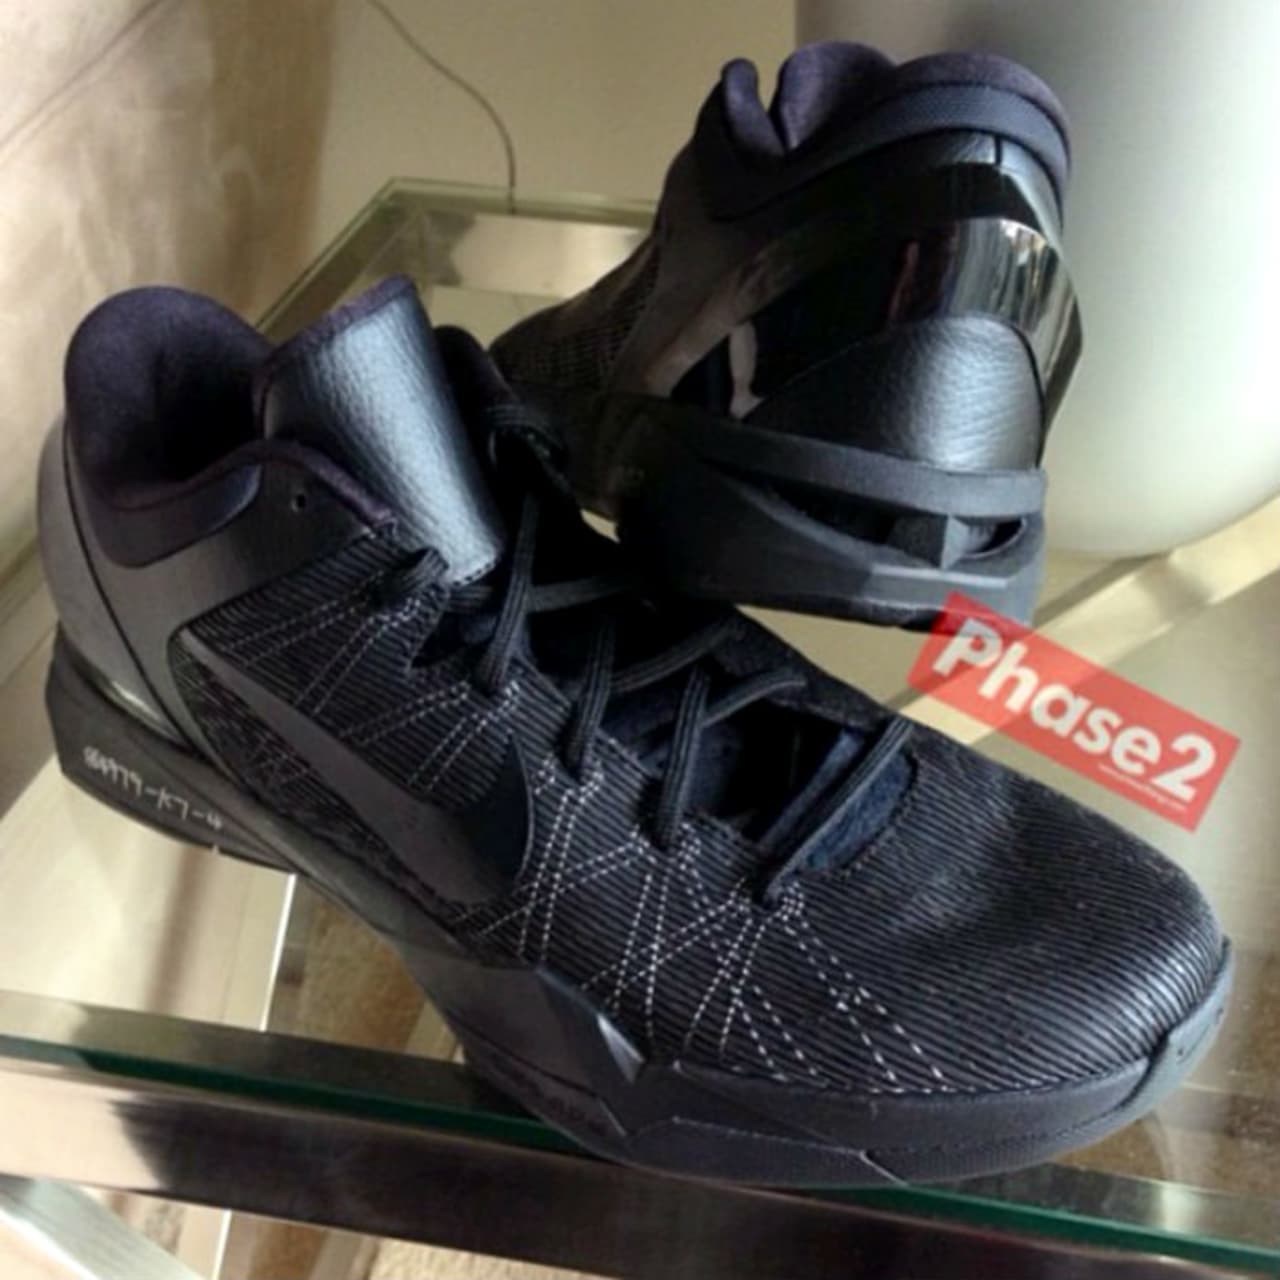 Unreleased Nike Kobe Samples | Sole Collector